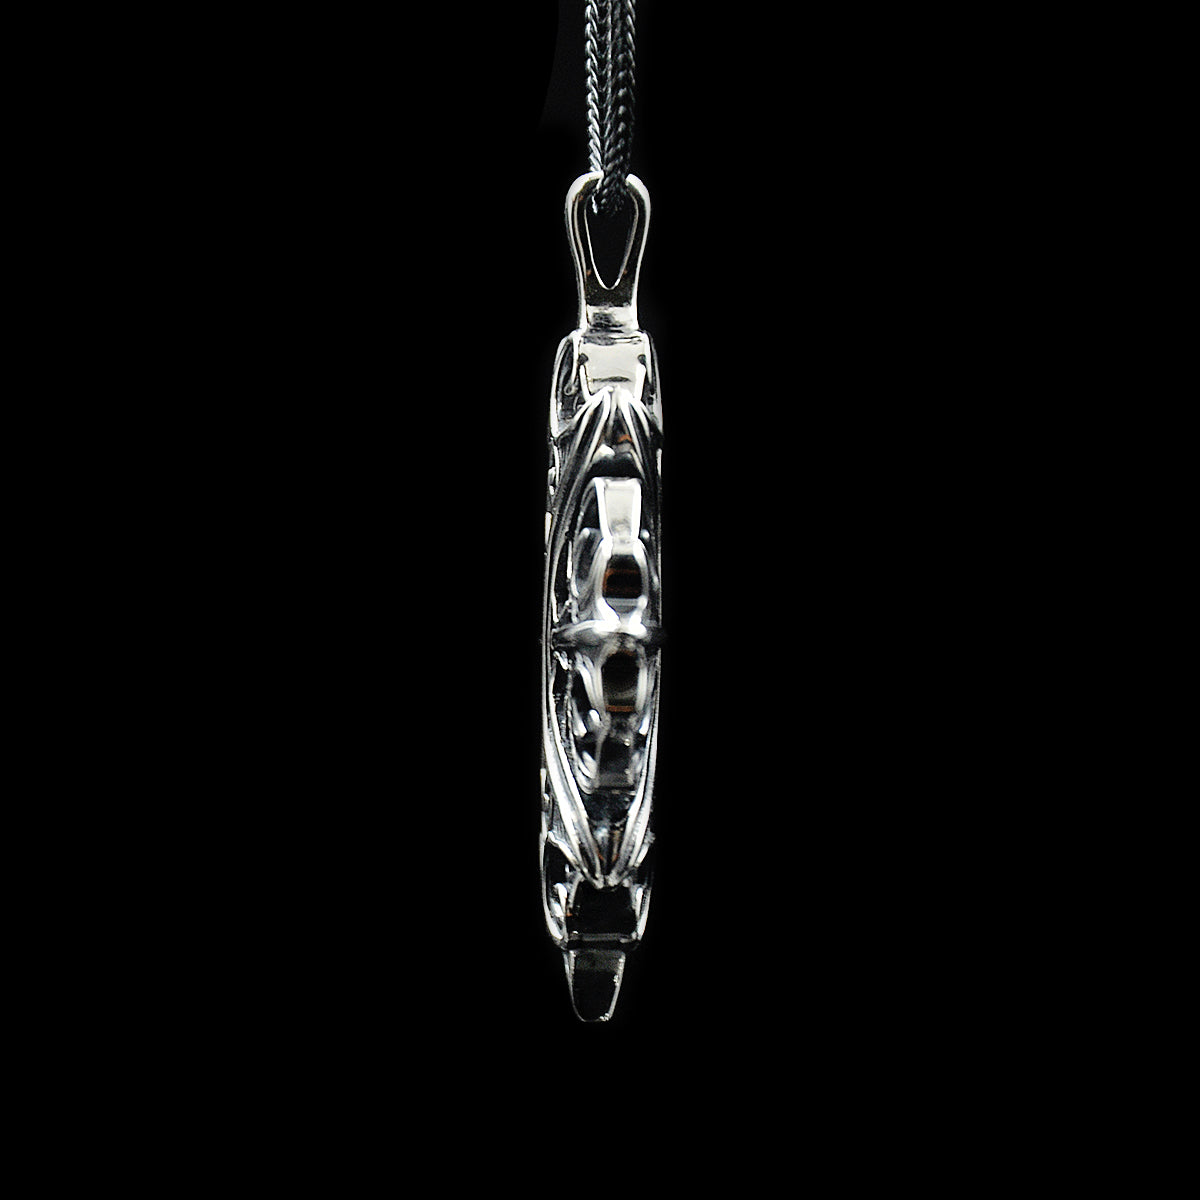 DYQ Jewelry Kabala Men's Necklace Pendant 925 Silver Men's jewelry brand